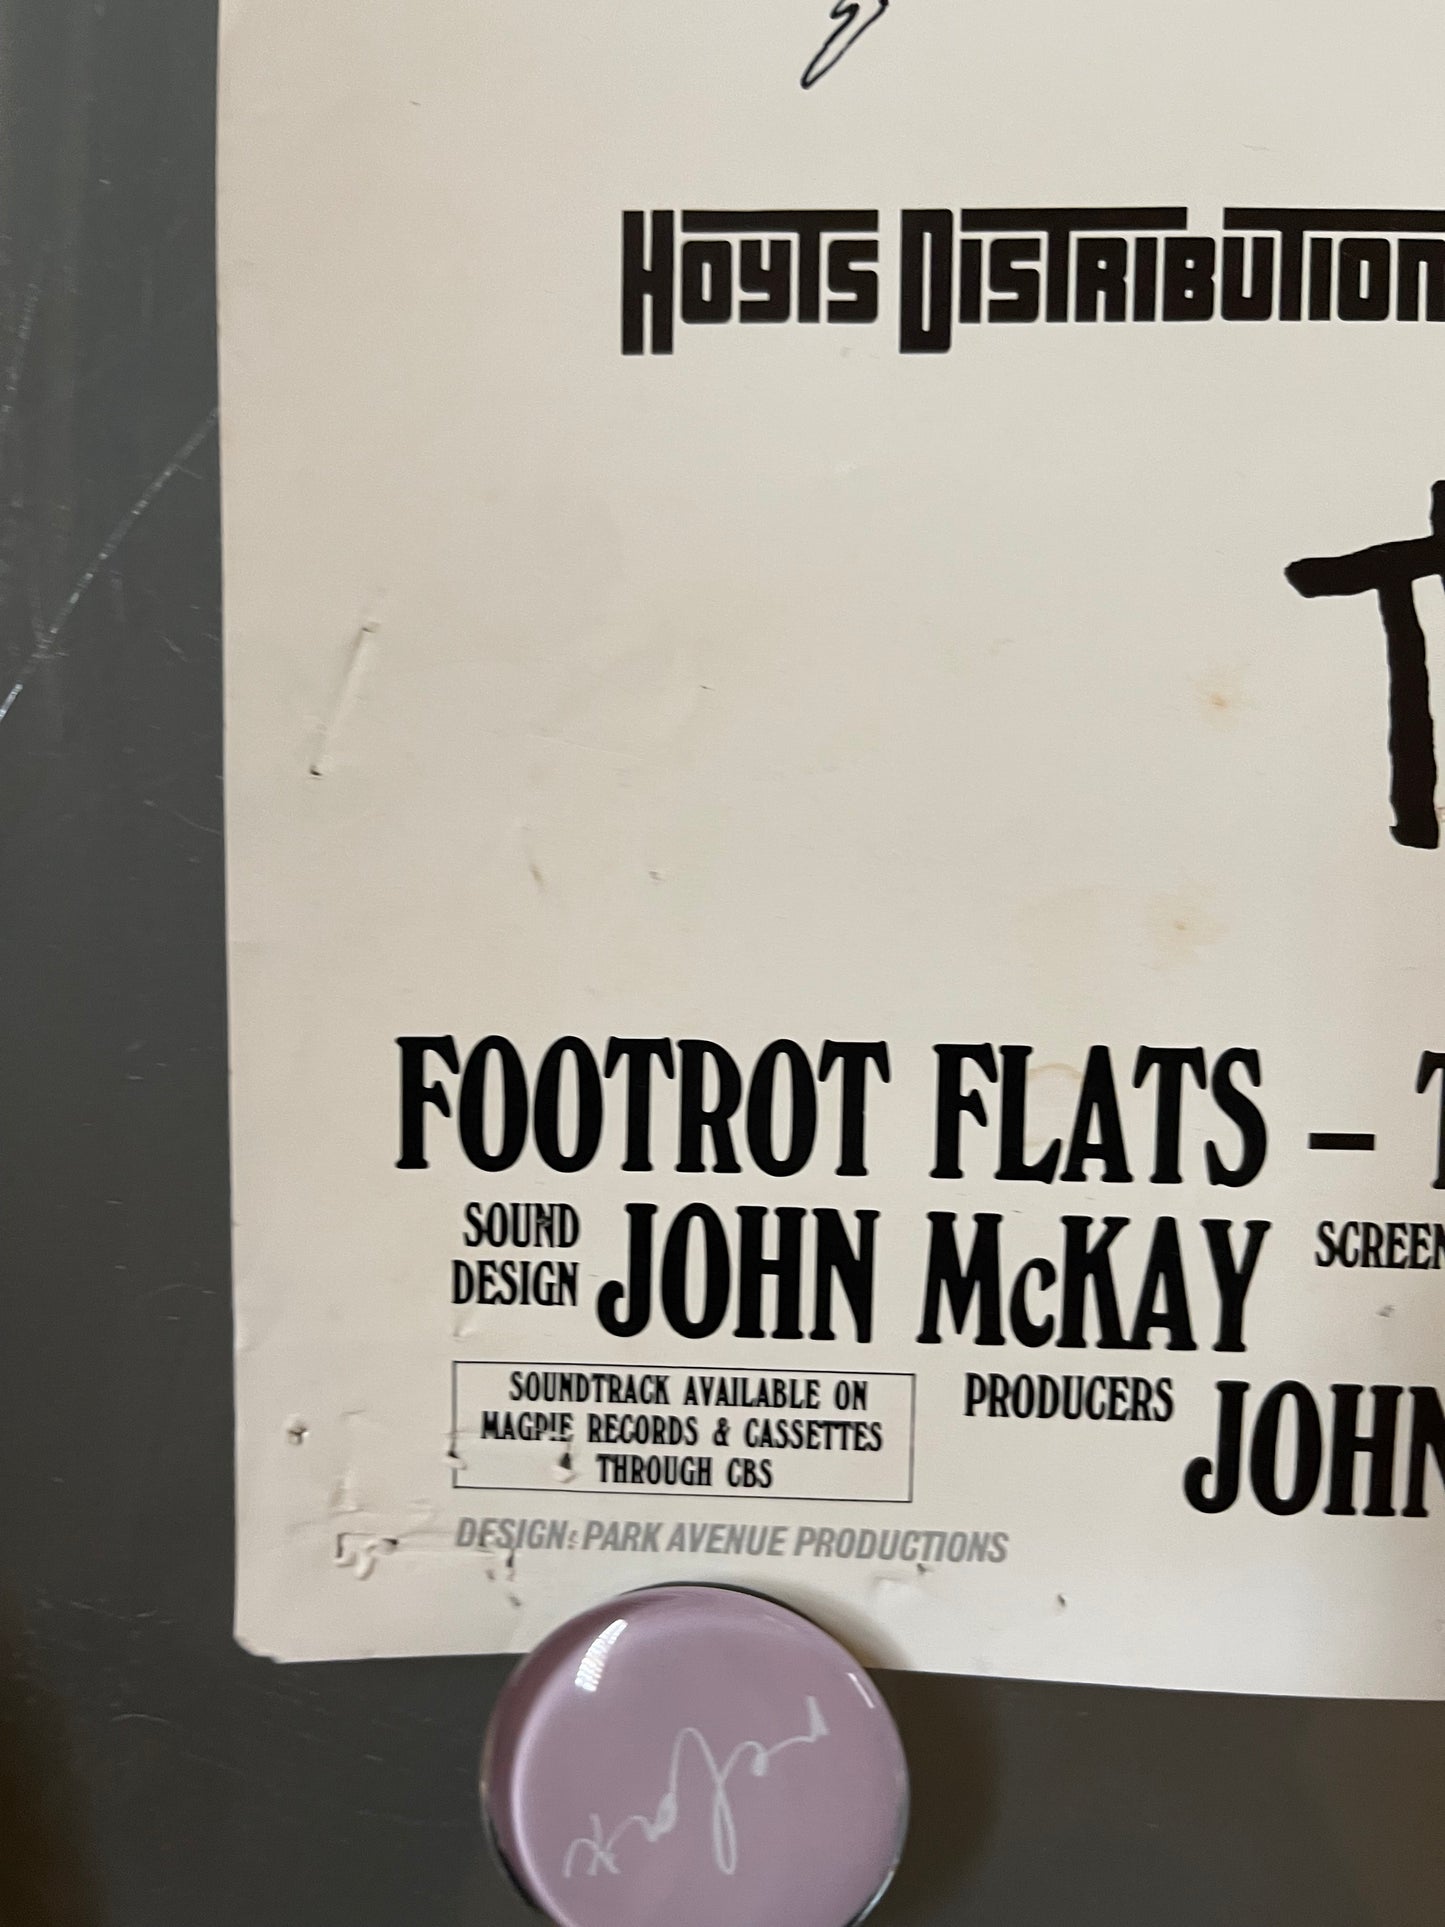 Footrot Flats (1986) - Daybill